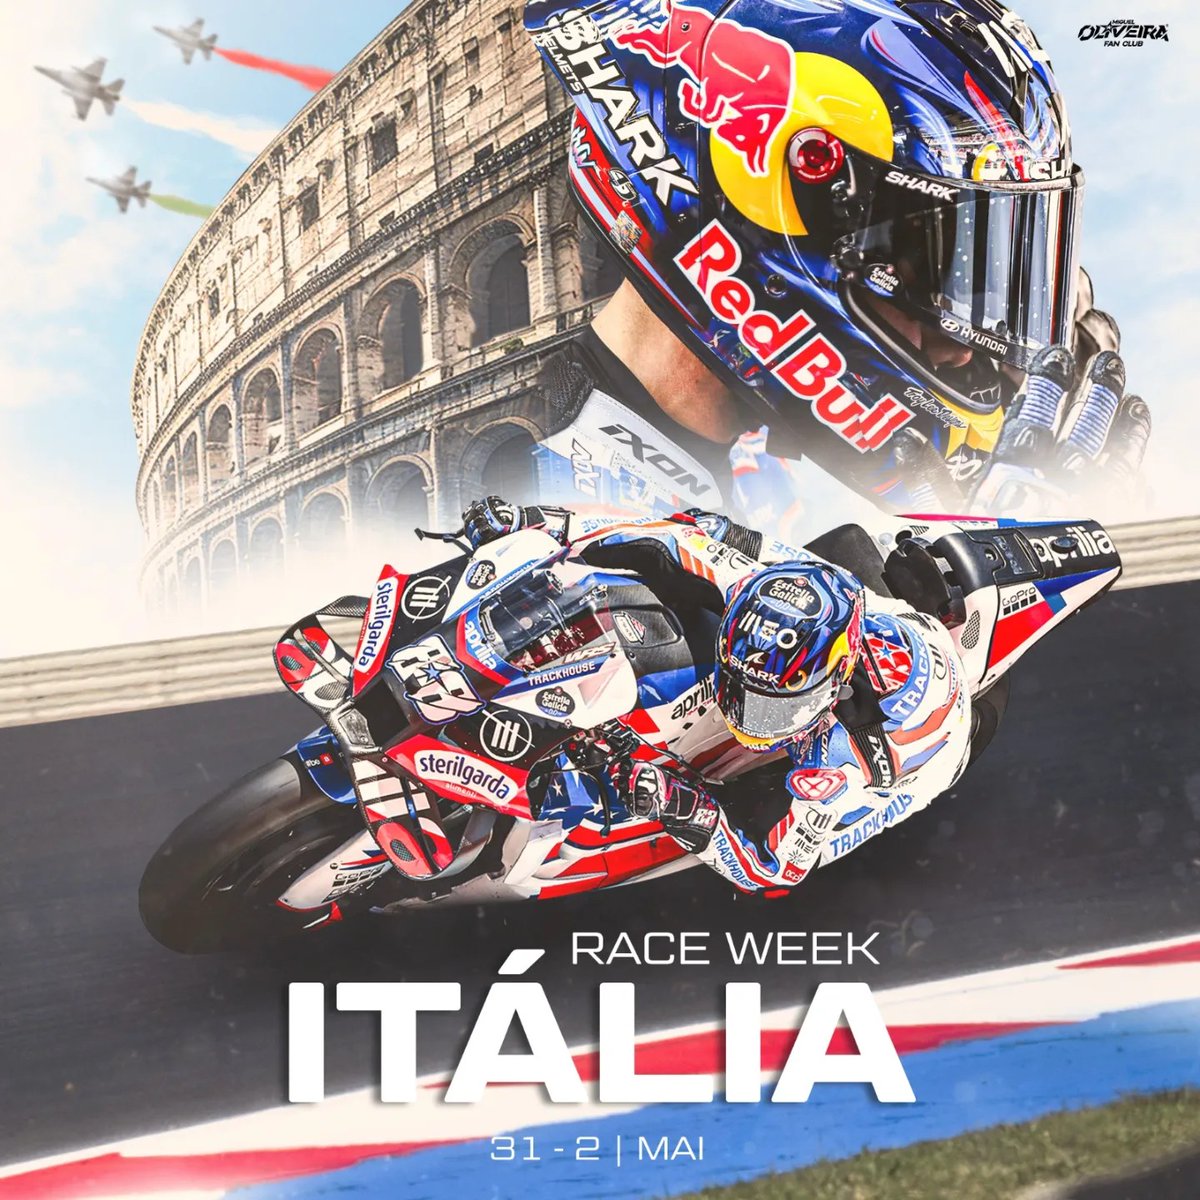 RACE WEEK! 🏁

Feeling the adrenaline for Mugello. Avanti, squadra! ✊🏼

#turma88  #ItalianGP @TrackhouseMoto @MotoGP